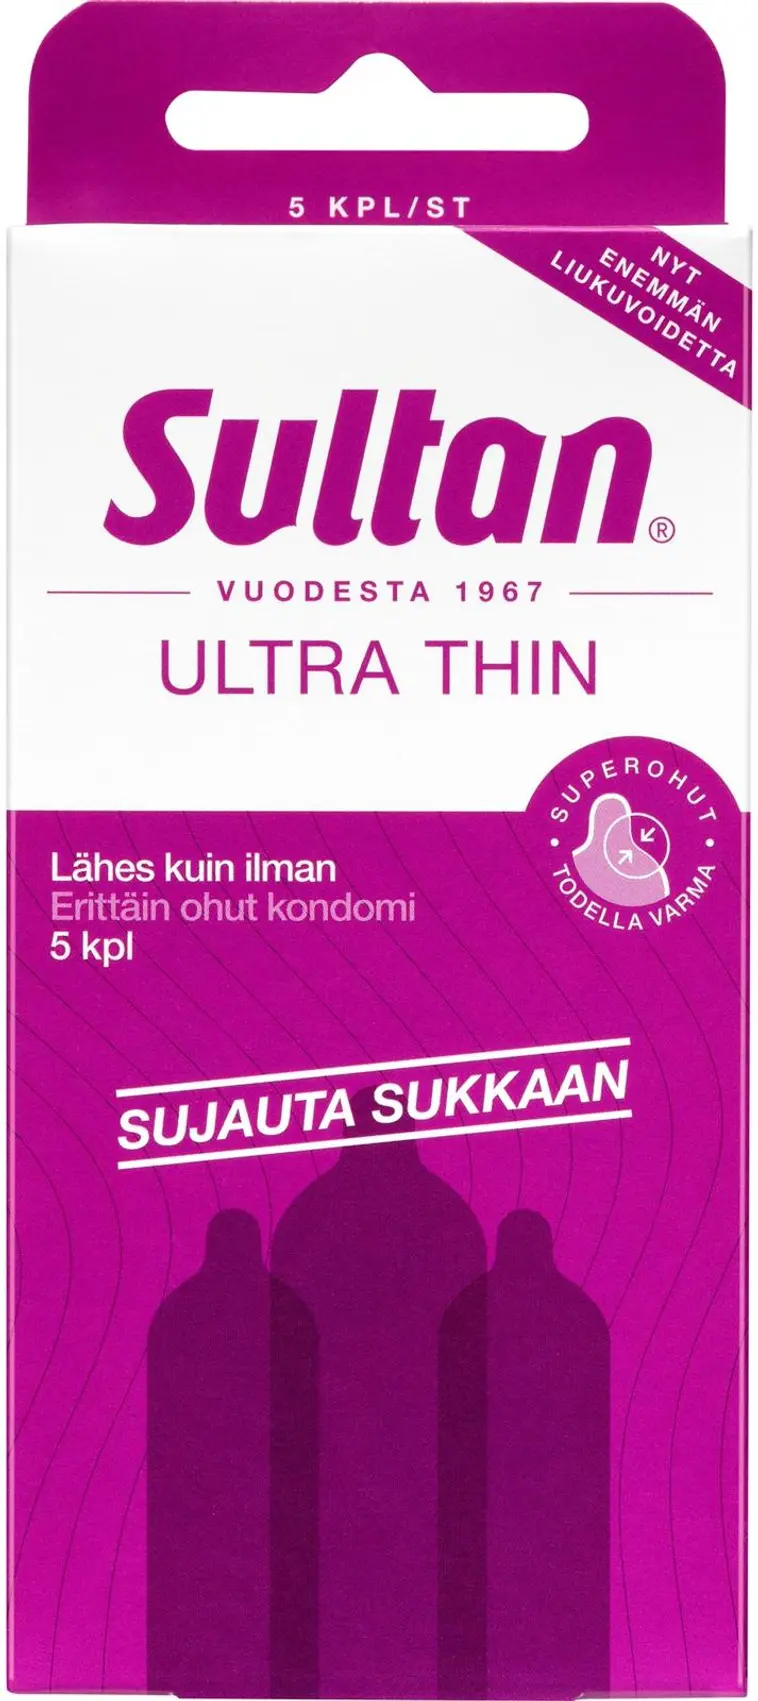 Sultan Ultra Thin superohut kondomi 5kpl